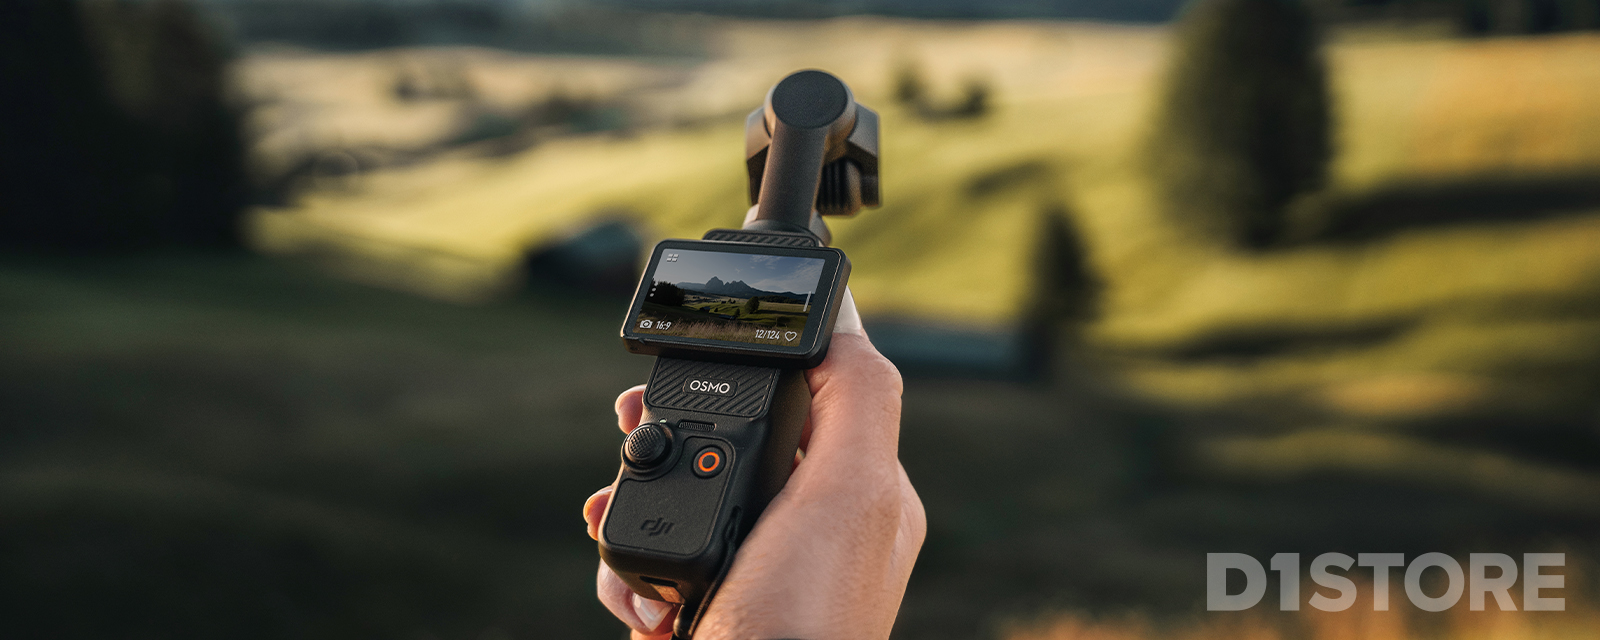 Osmo Pocket 3 gimbal camera recording a landscape shot in horizontal orientation